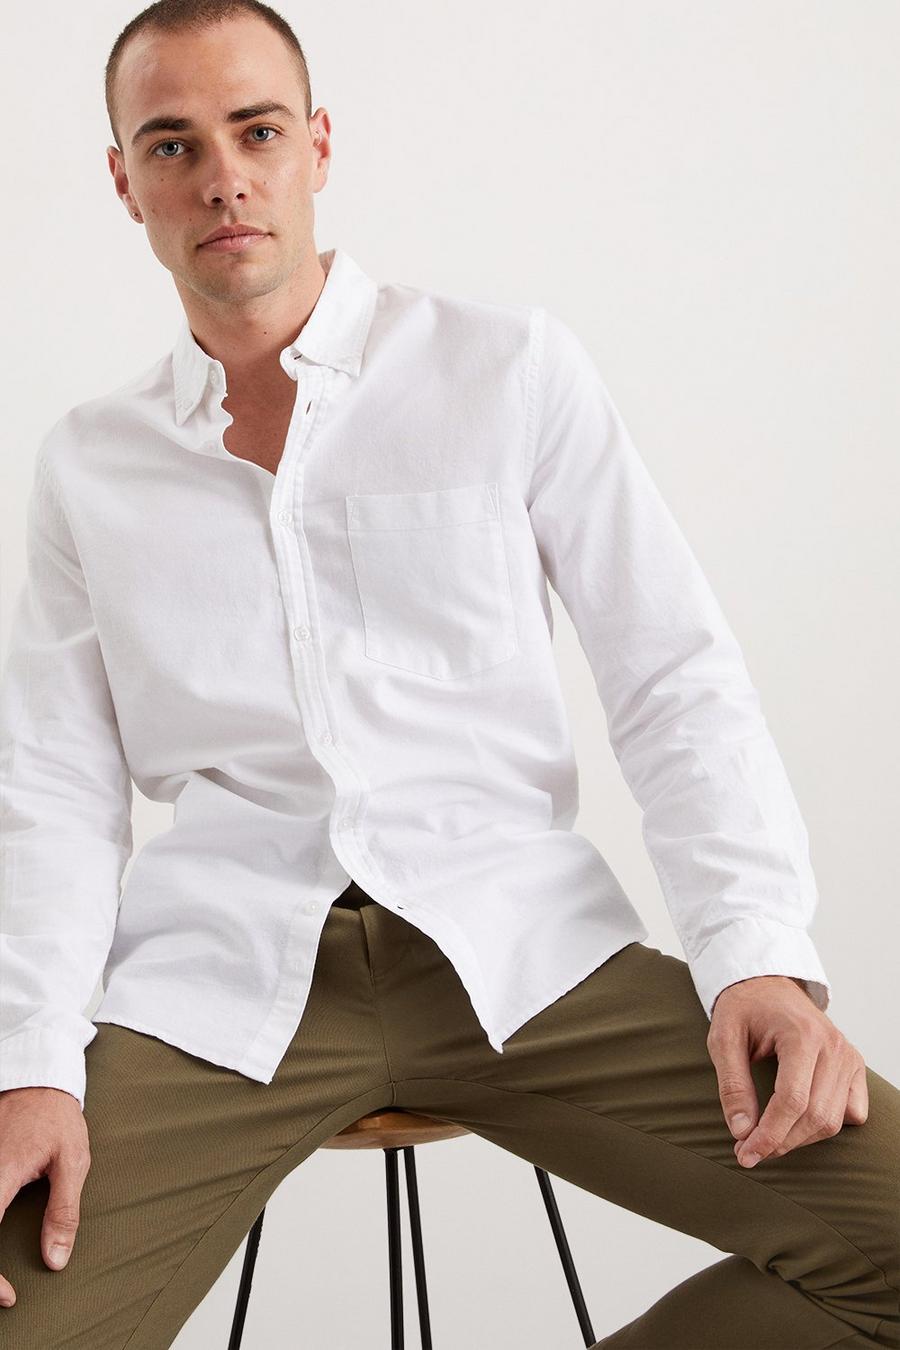 Long Sleeve Chest Pocket Oxford Shirt